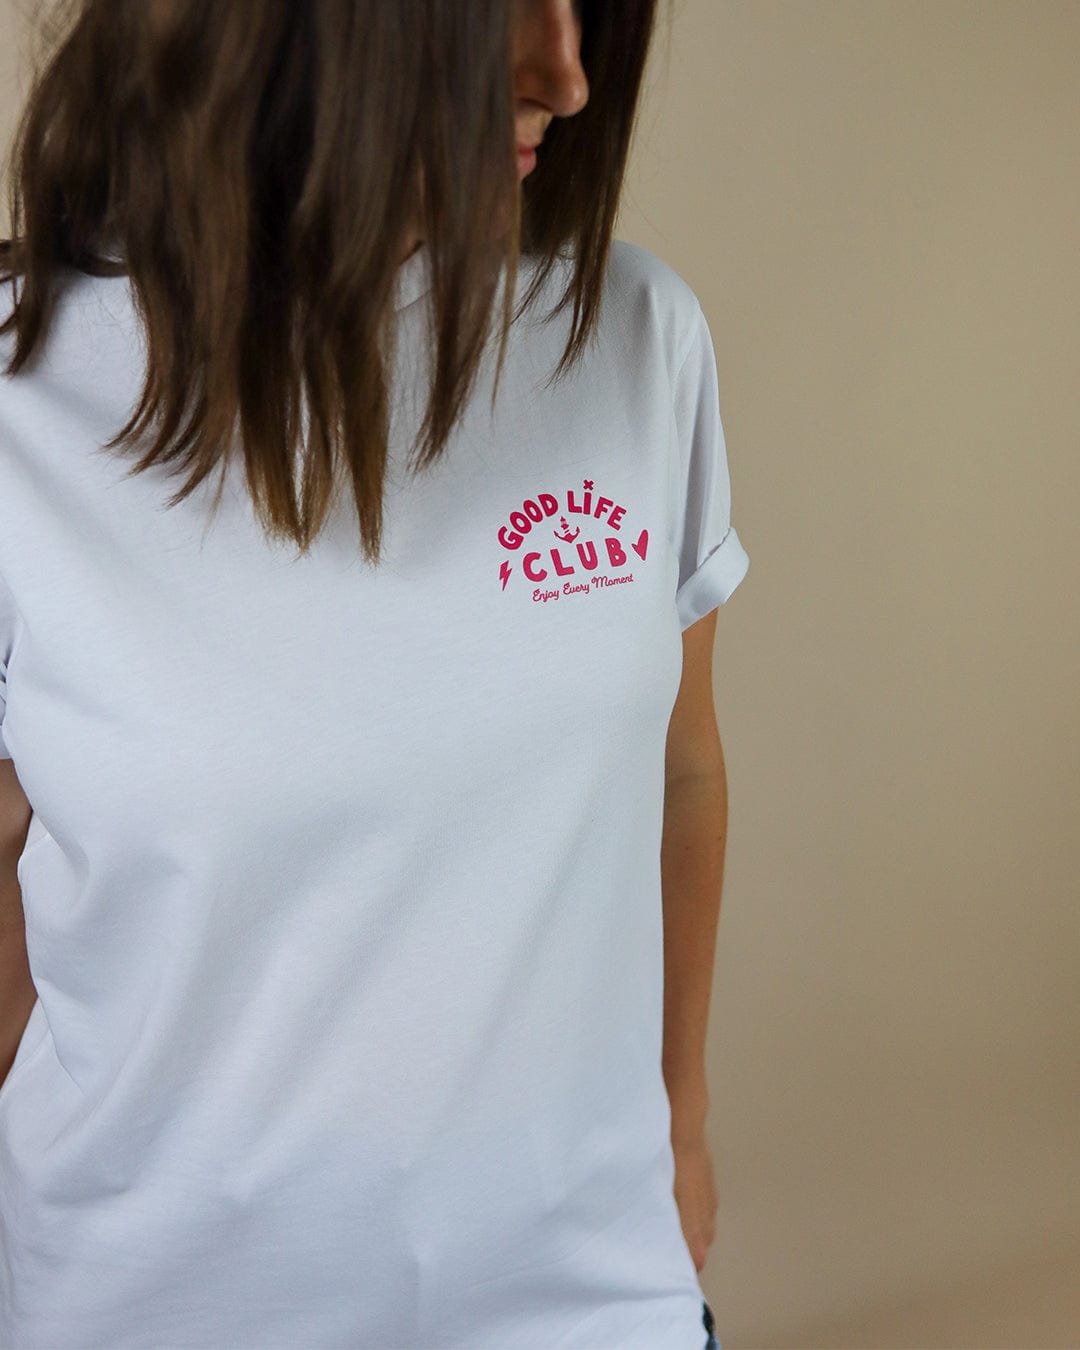 Good Life Club T-Shirt - White / Pink